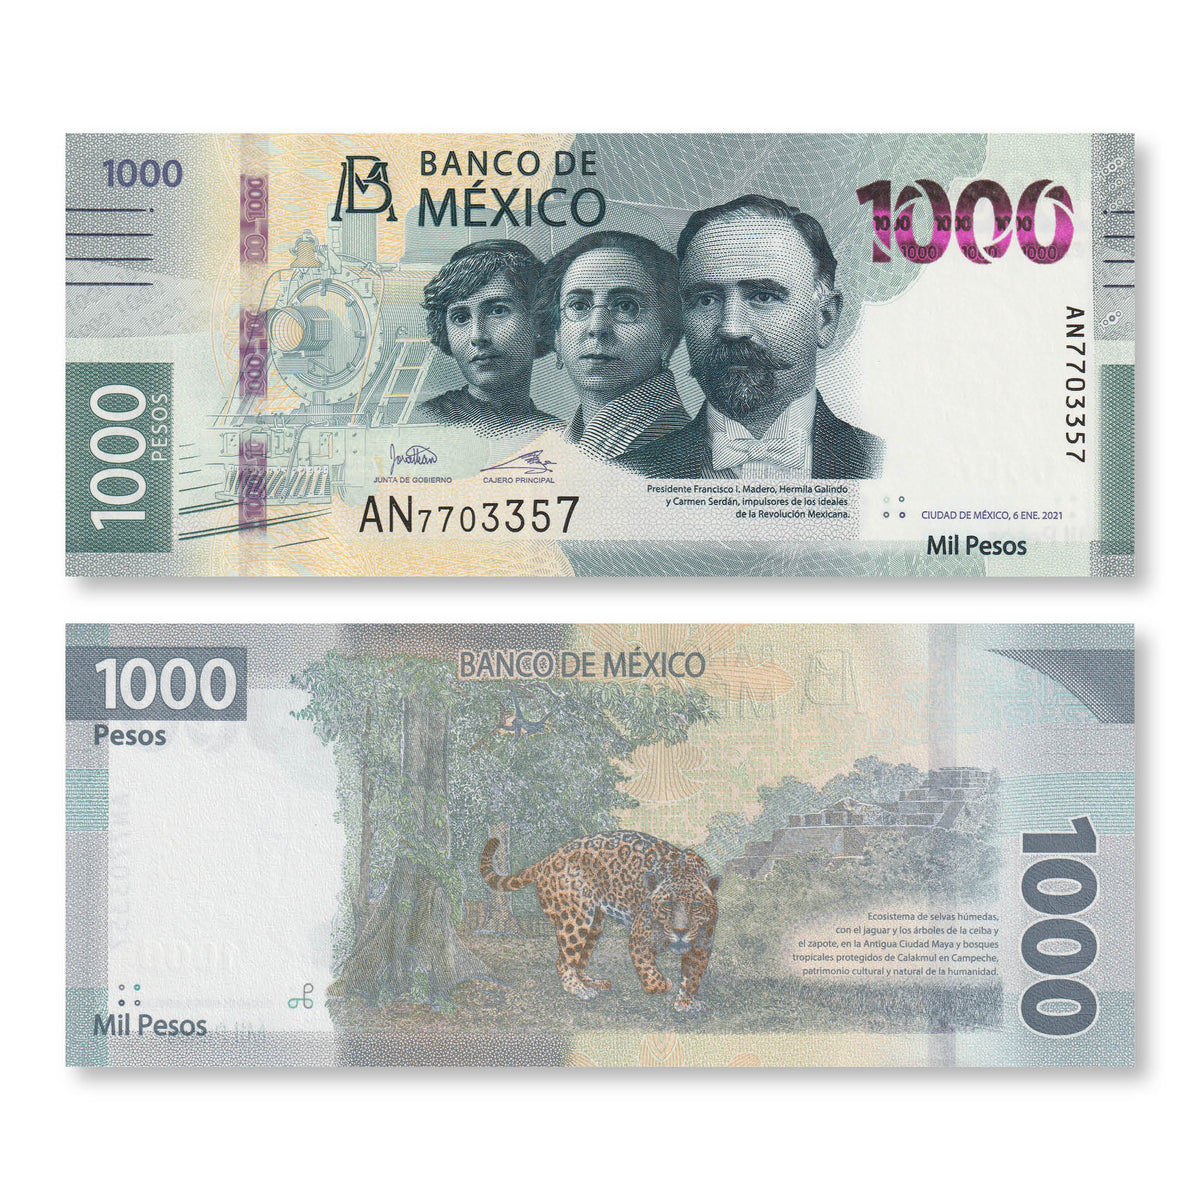 Mexico 1000 Pesos, 2021, B718b, UNC - Robert's World Money - World Banknotes